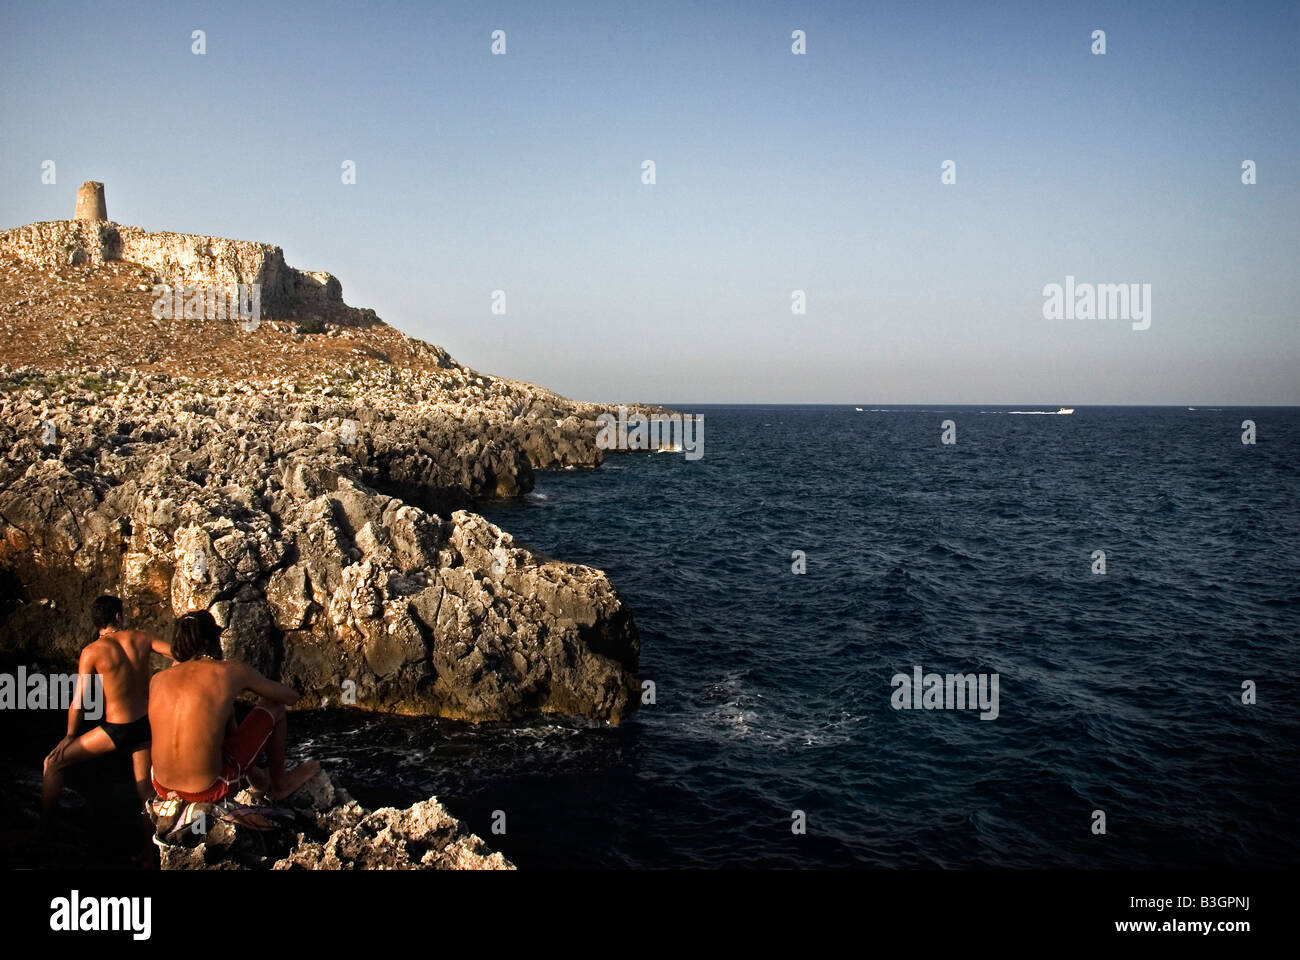 Puglia sea, Italy Stock Photo